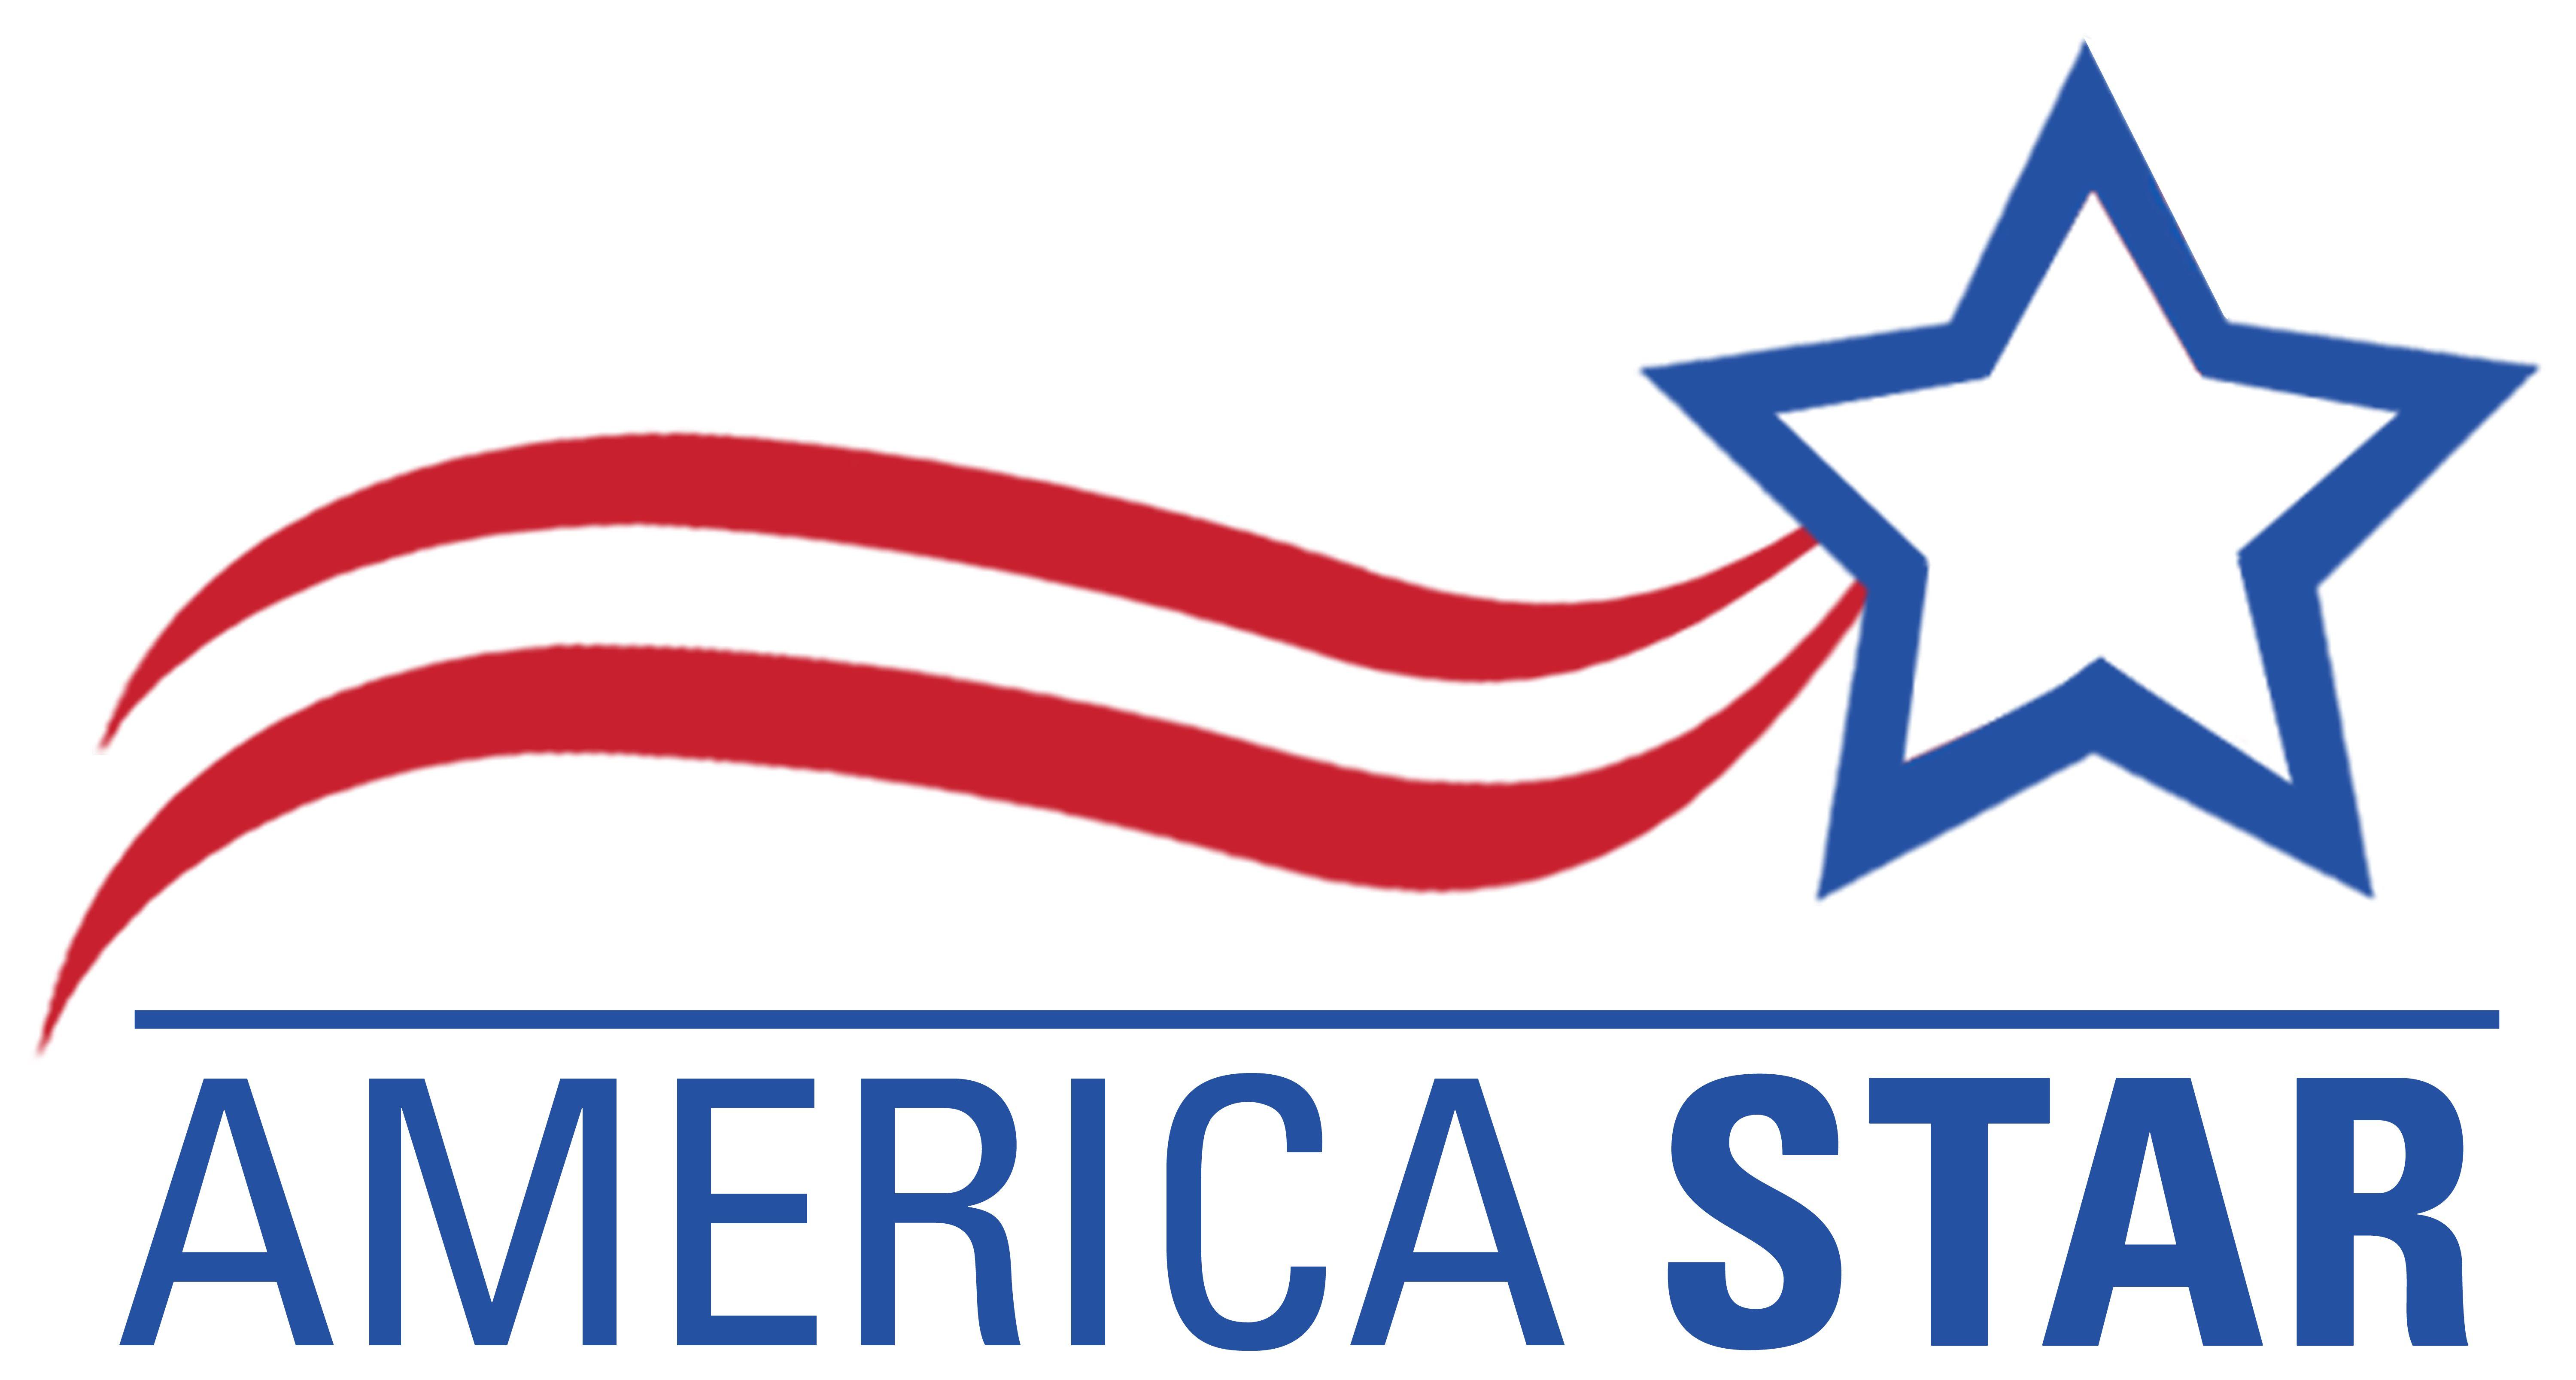 American Flaag Star Logo - Press Release. Press Releases. News & Events. U.S. Senator Bob